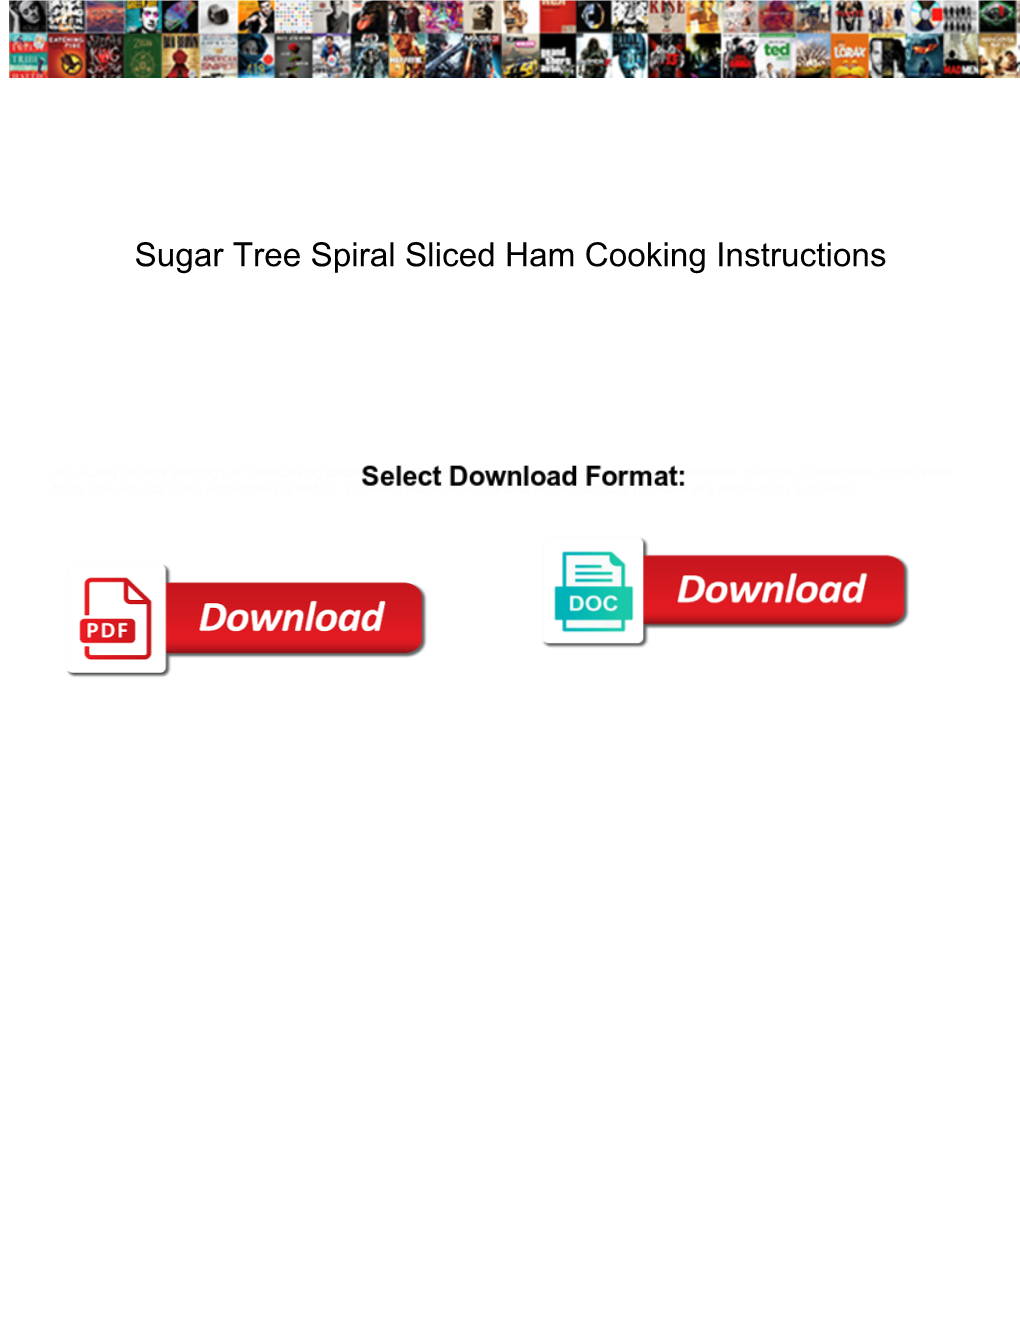 Sugar Tree Spiral Sliced Ham Cooking Instructions